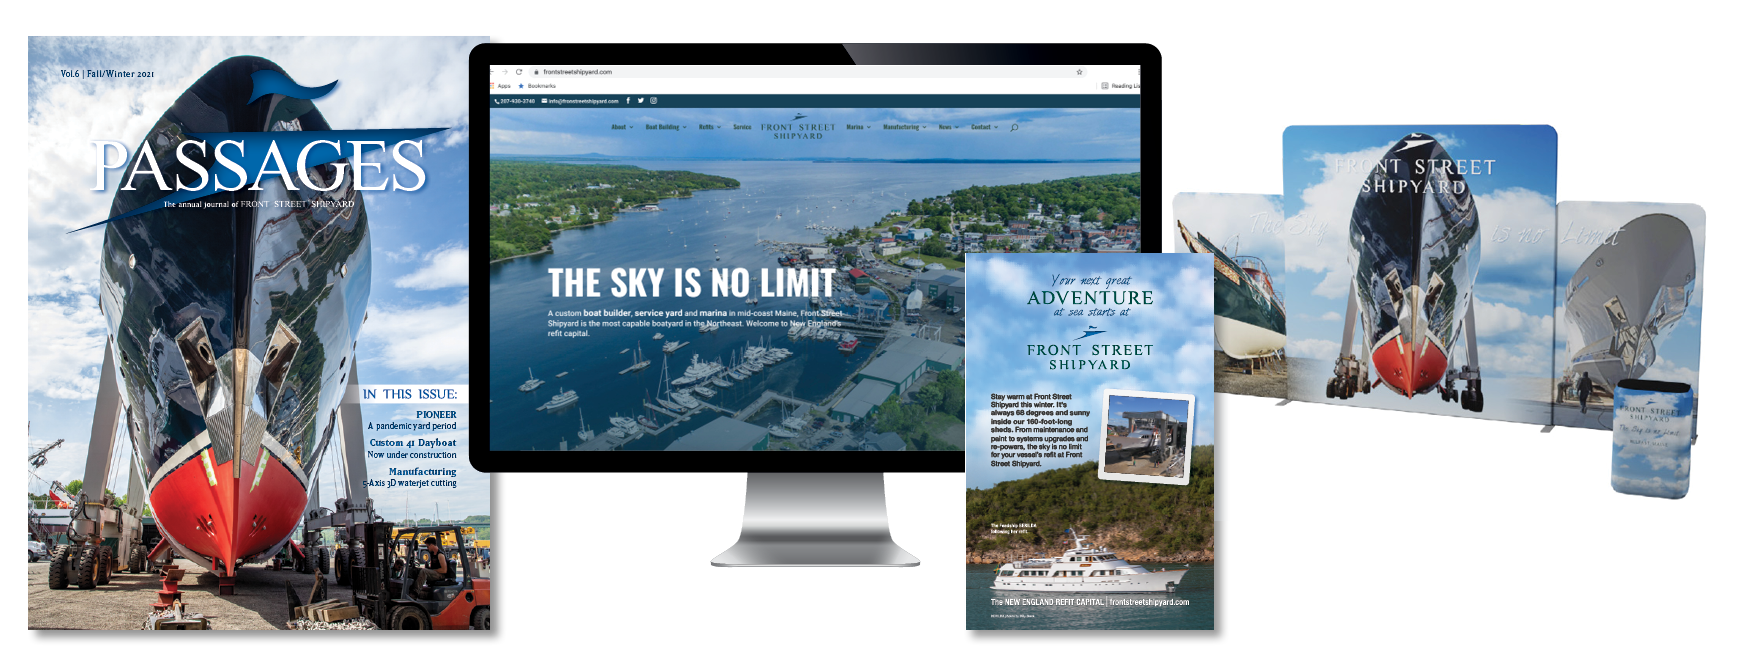 Front Street Shipyard website by Rhumbline Communications